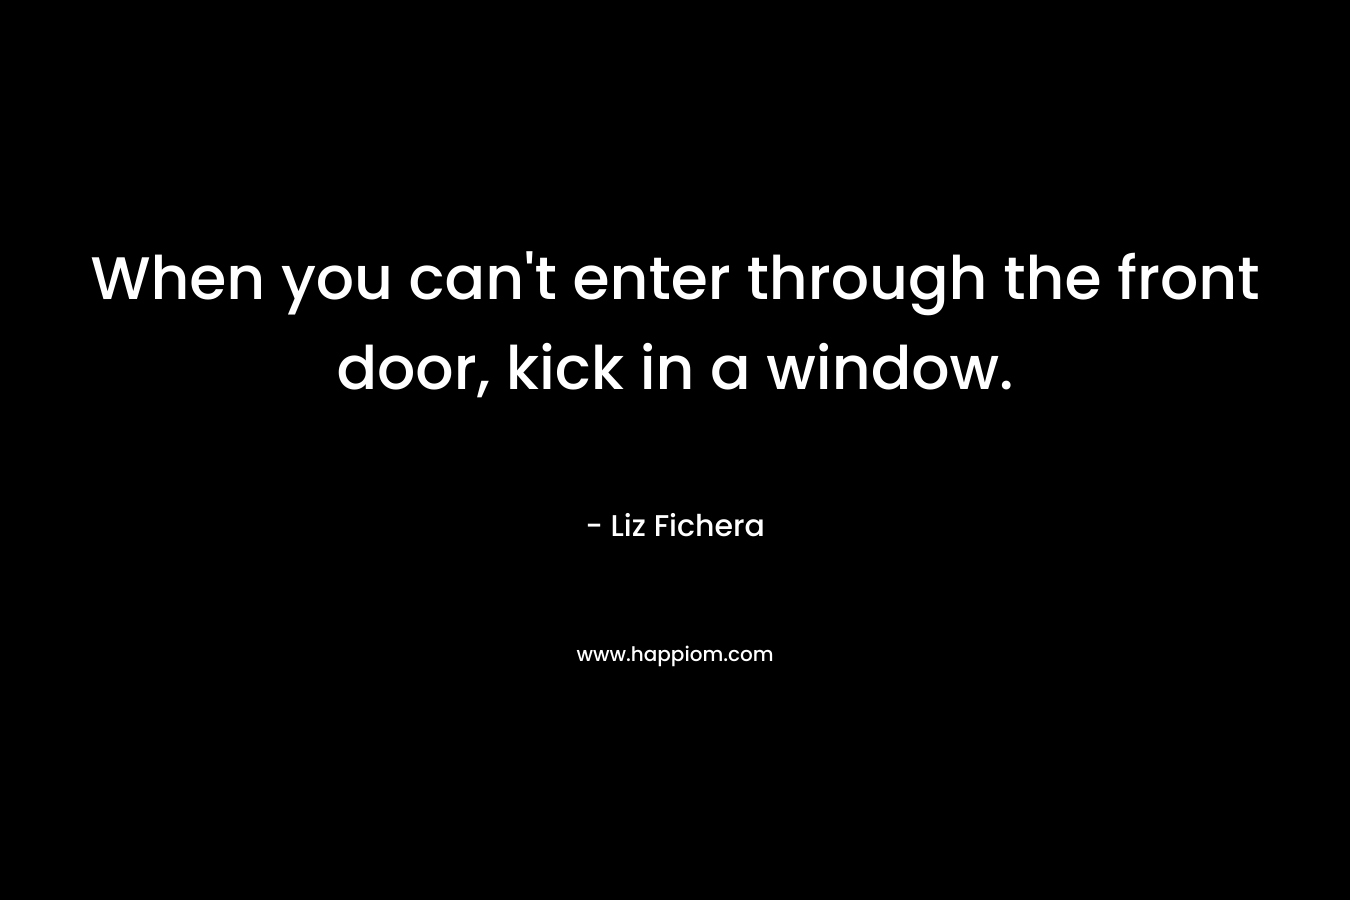 When you can’t enter through the front door, kick in a window. – Liz Fichera